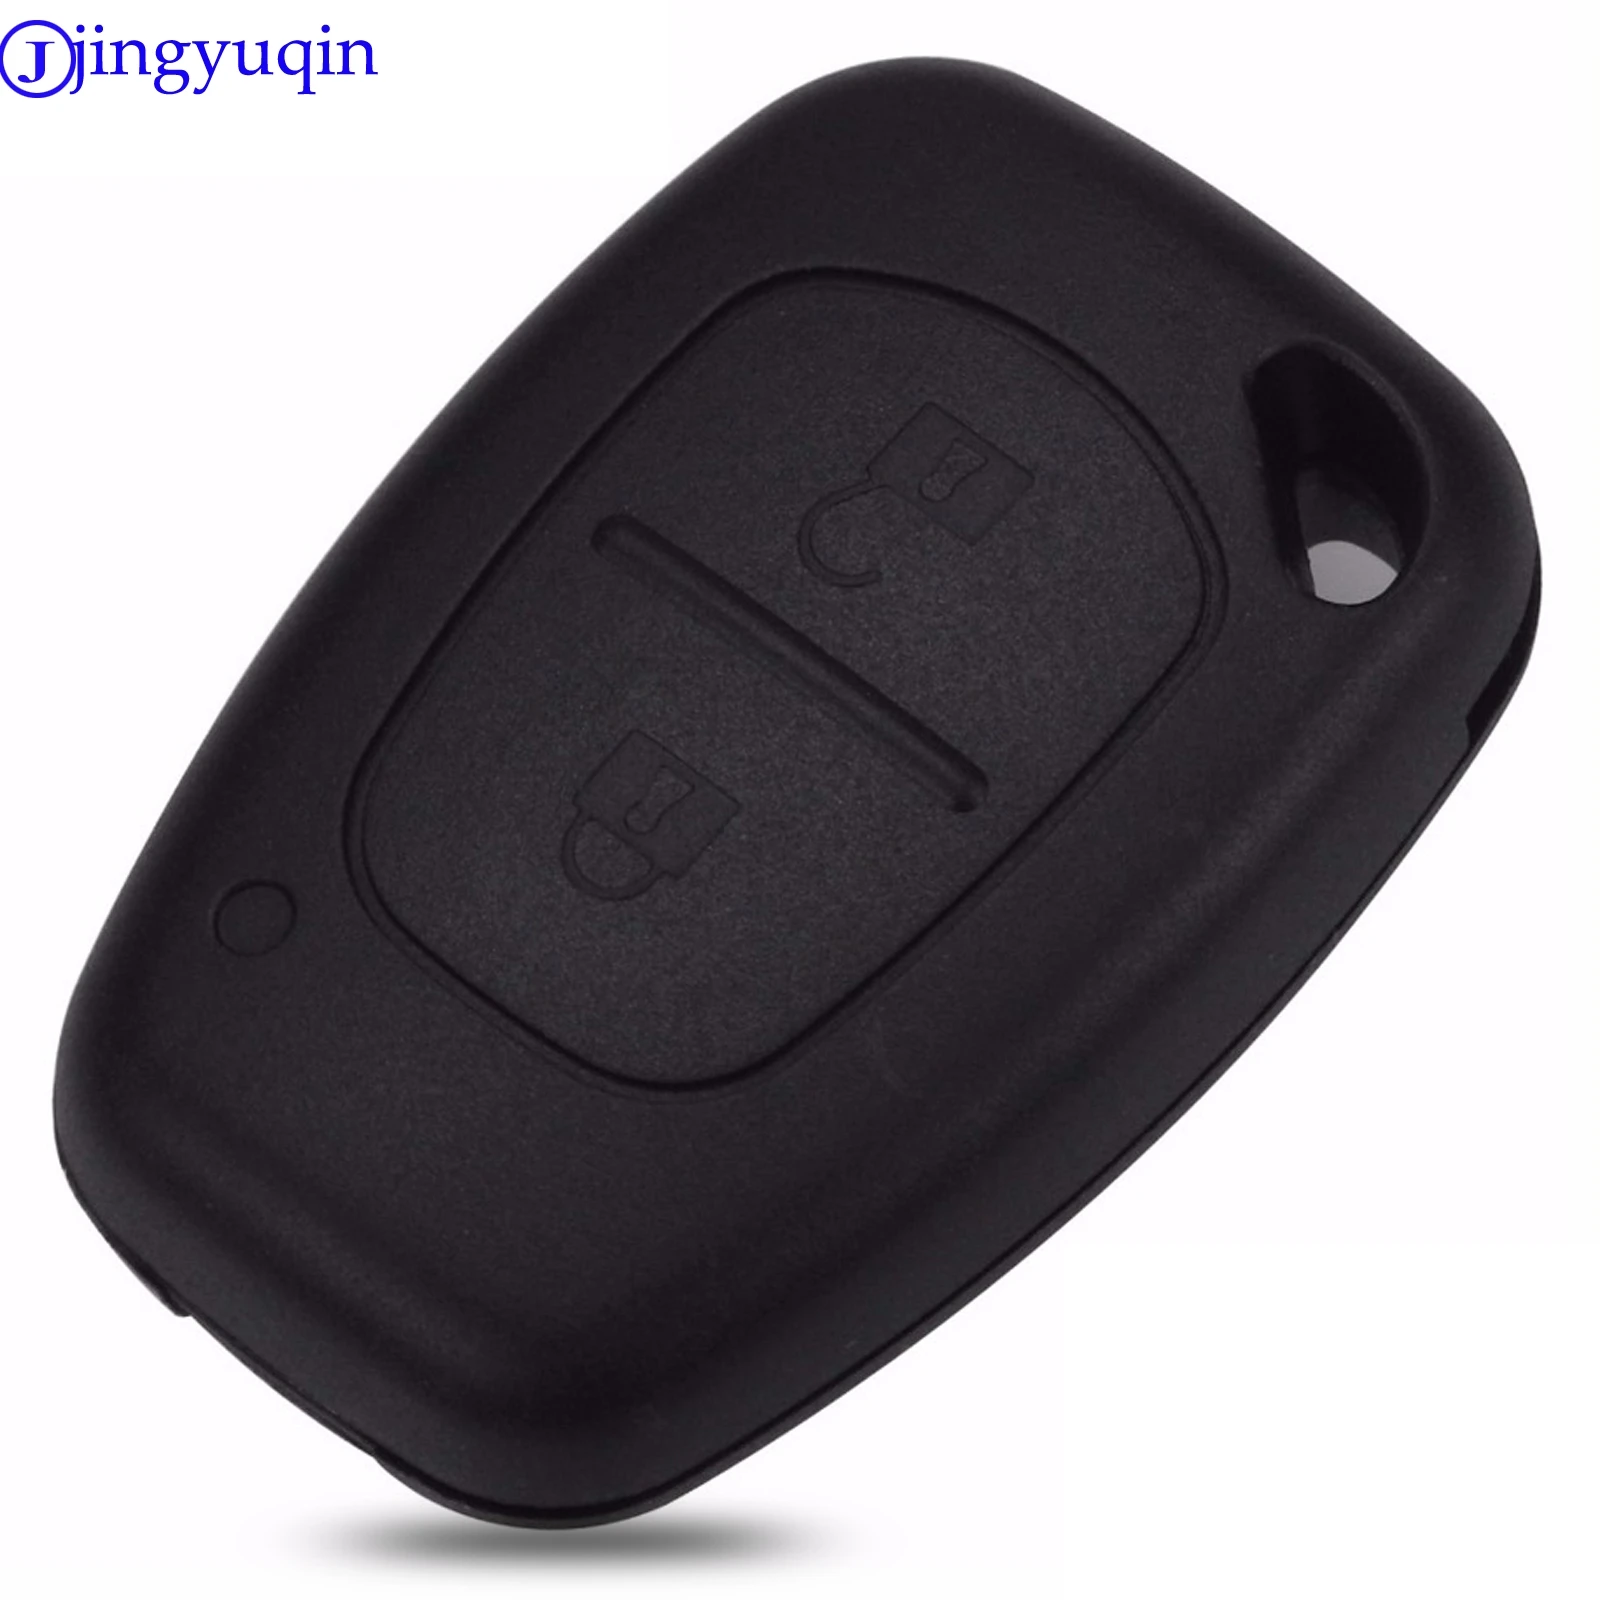 

jingyuqin 2 Buttons Remote Car Key Shell Styling For Renault Trafic Vauxhall Opel Vivaro Nissan Primastar Flip Fob